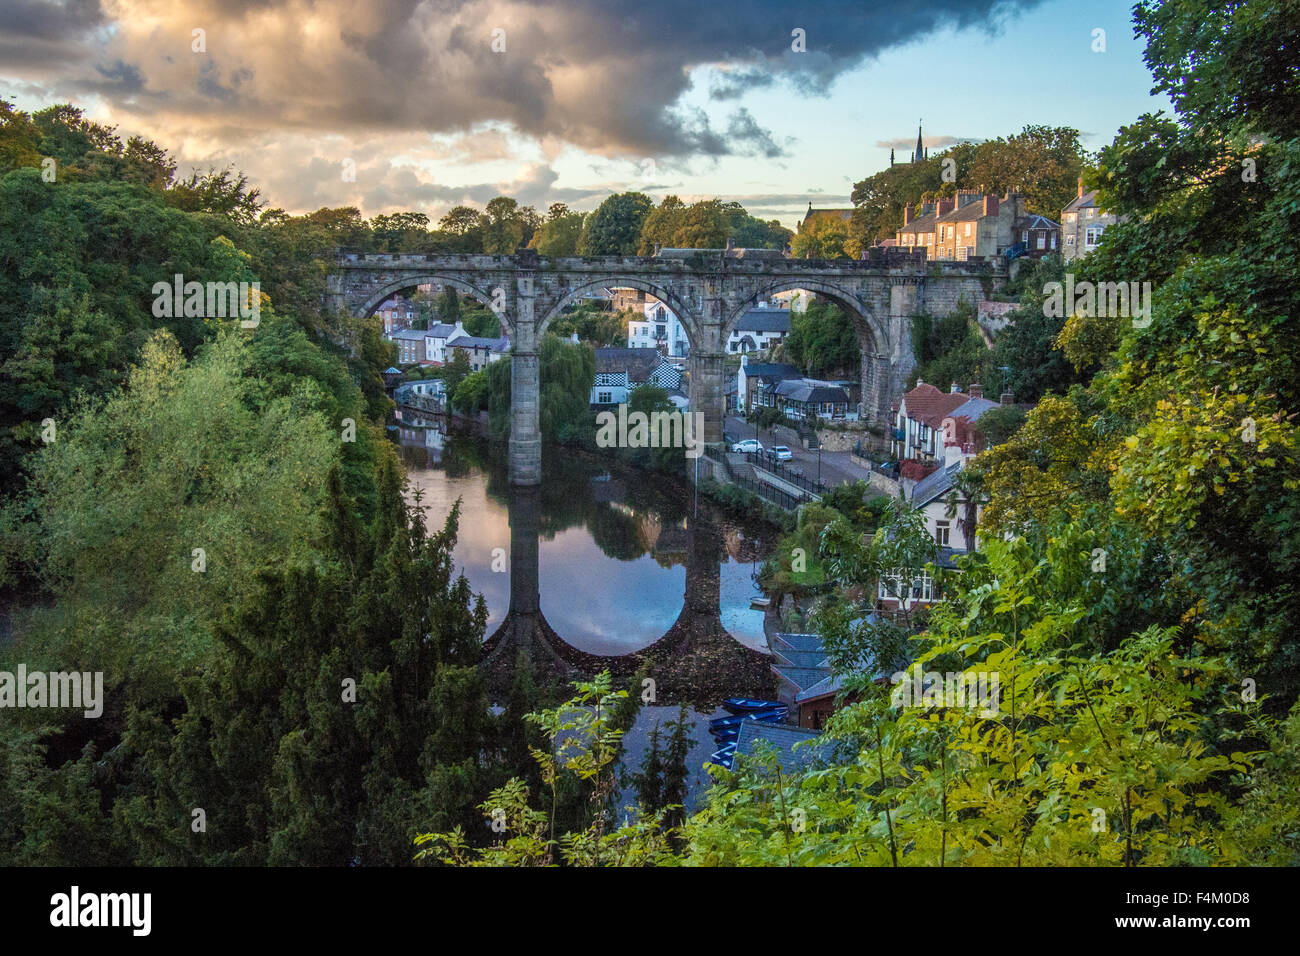 Viaduct across the River Nidd, Knaresborough, North Yorkshire, England. Stock Photo